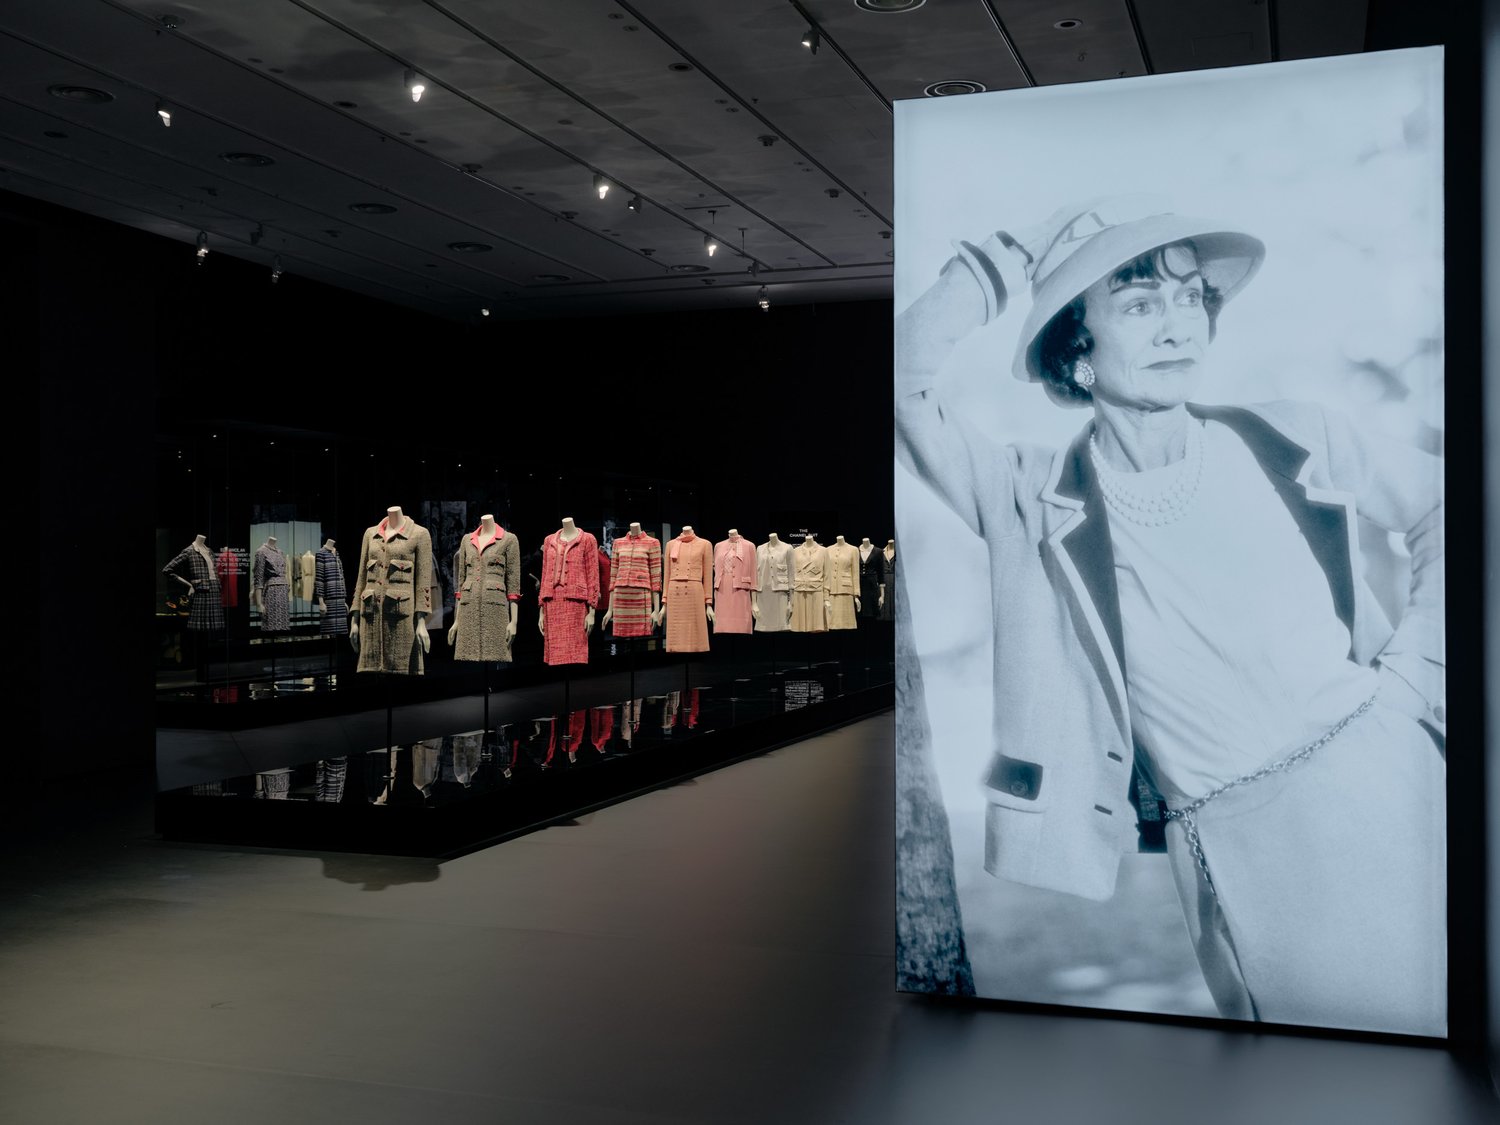 Gabrielle Chanel. Fashion Manifesto V&A exhibition poster